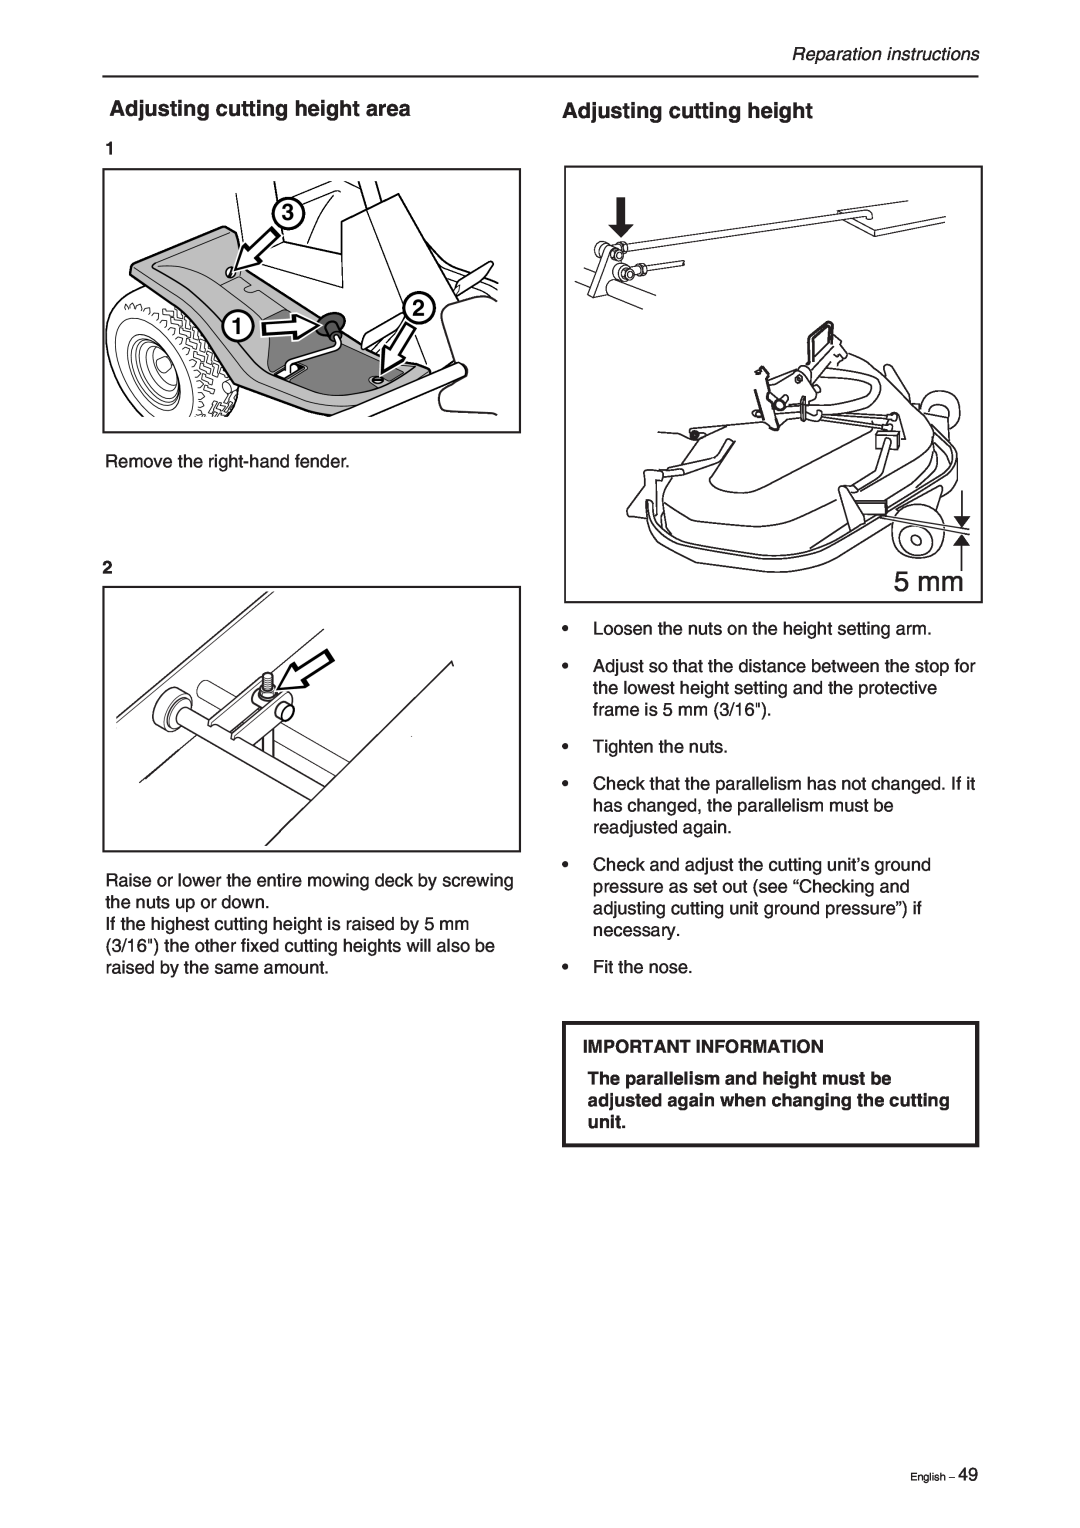 Briggs & Stratton RIDER 11 BIO, RIDER 16 Adjusting cutting height area, Reparation instructions, Important Information 